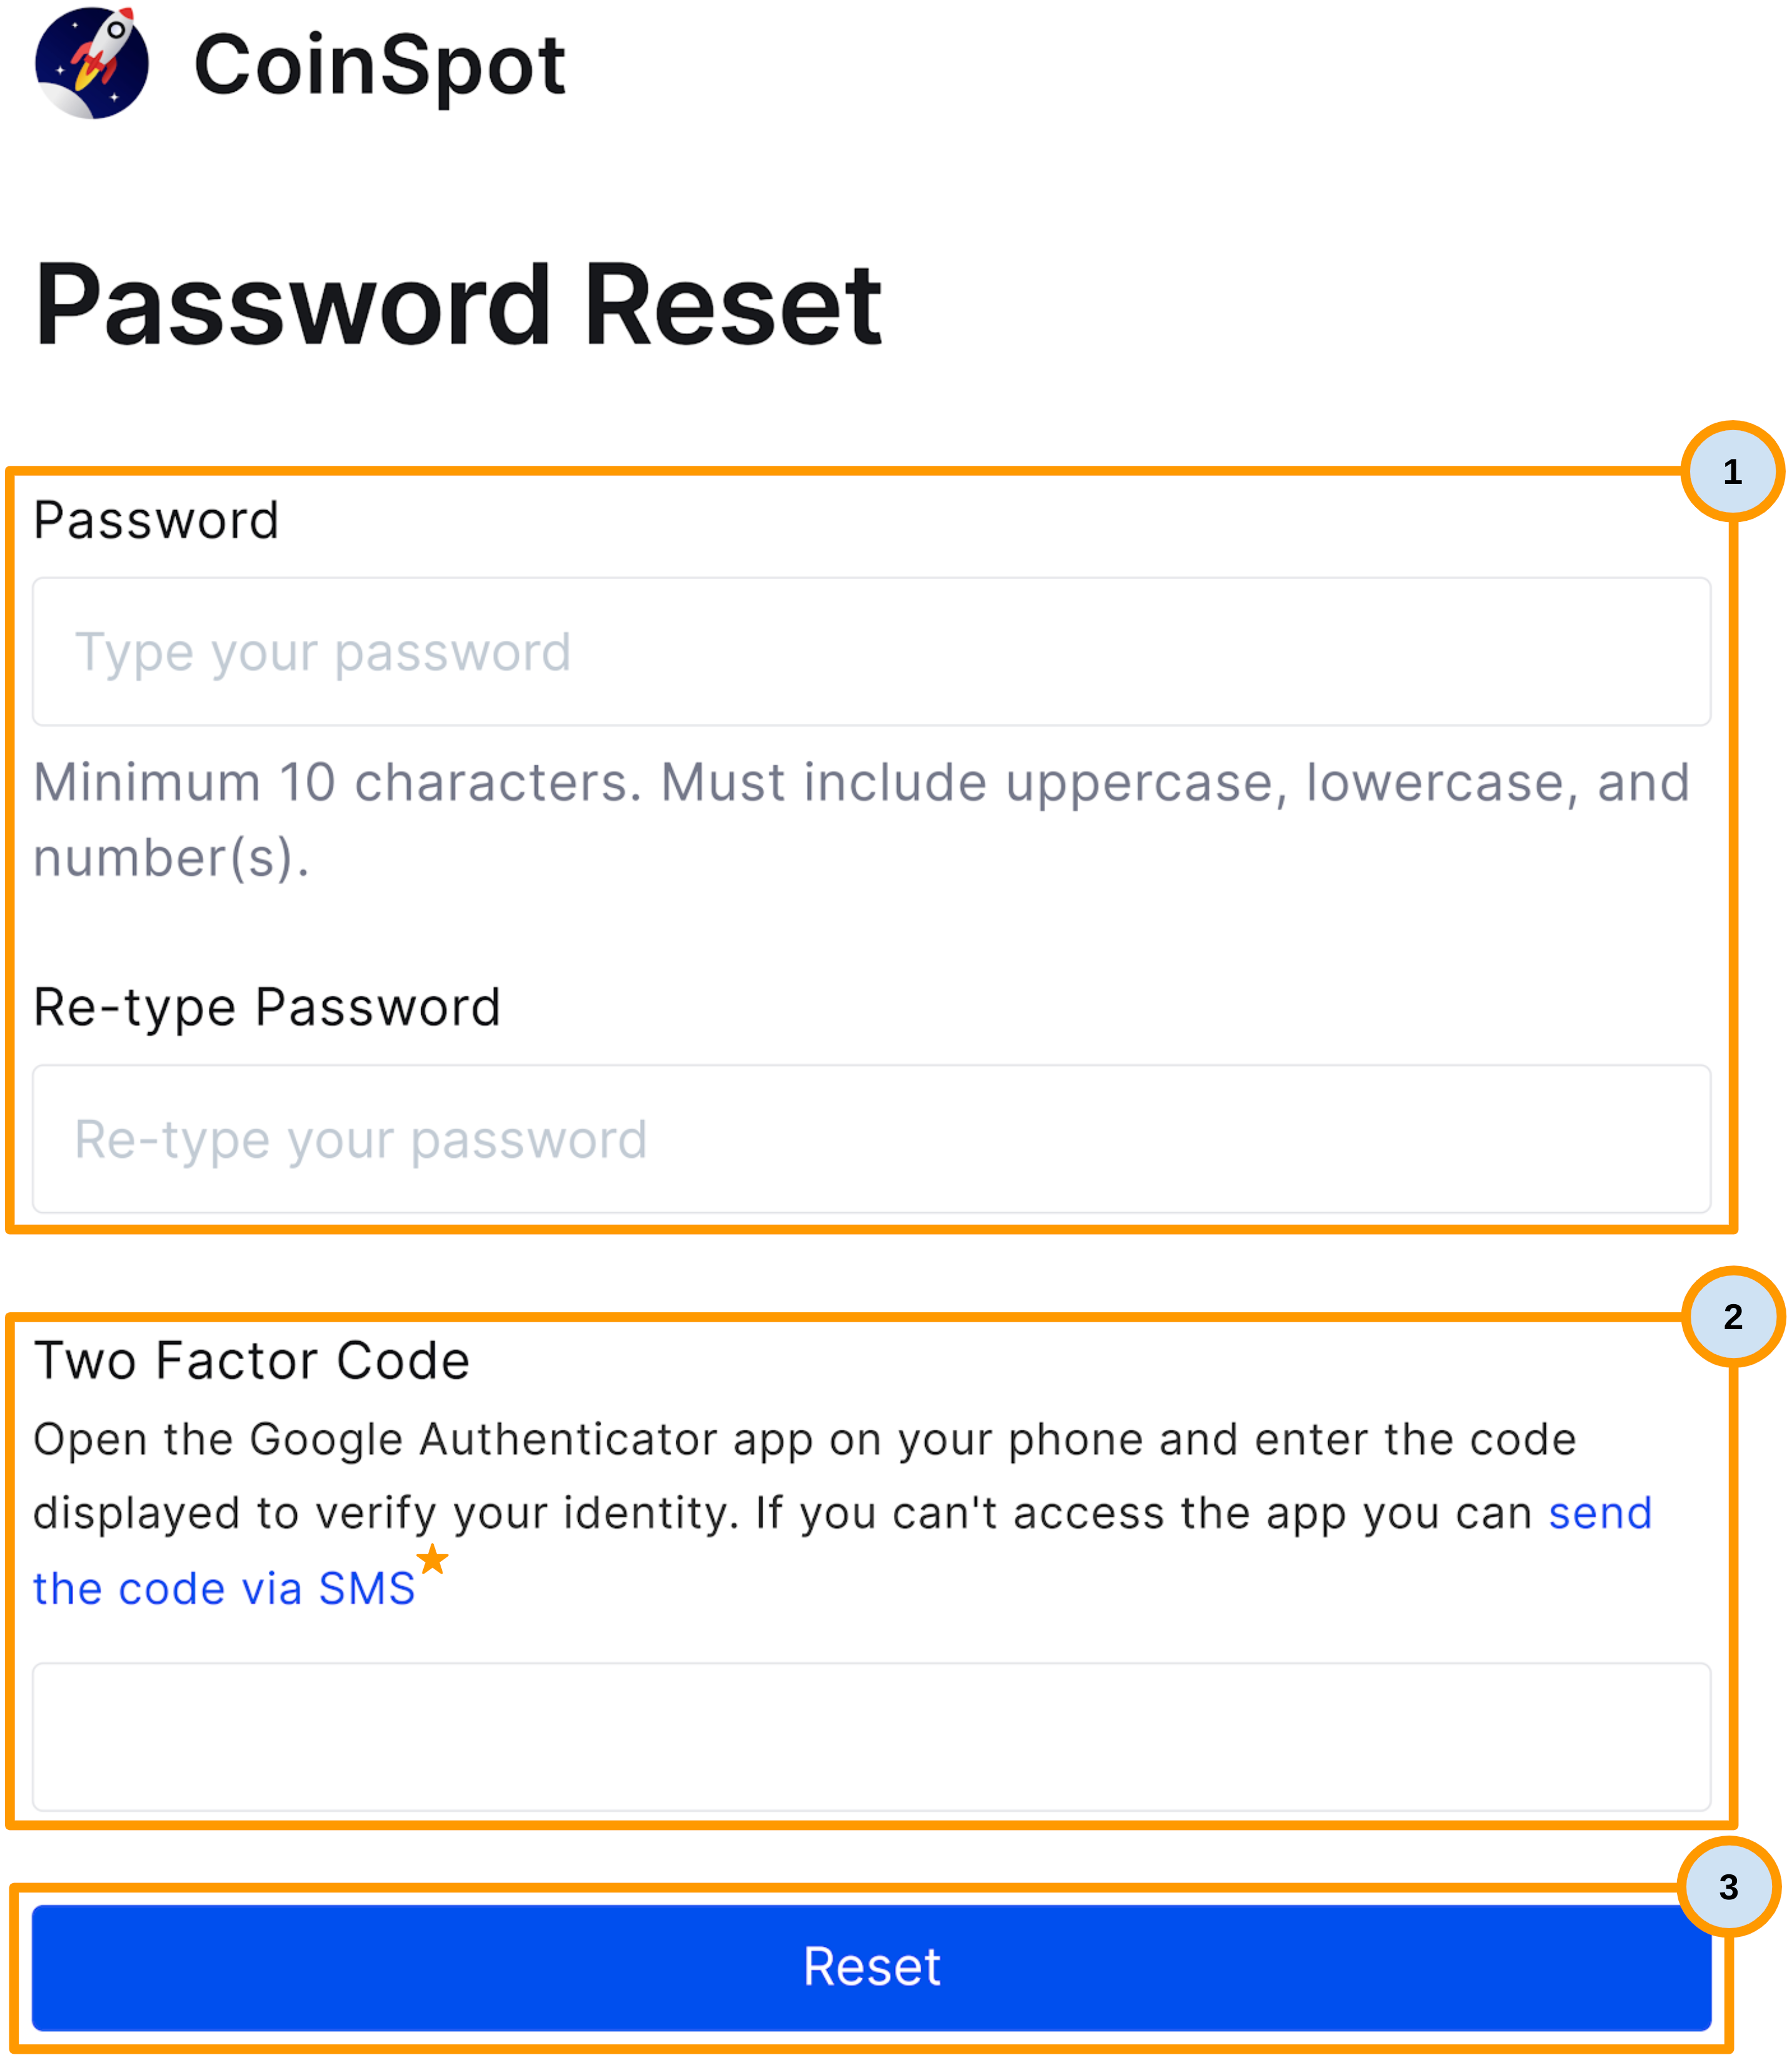 CoinSpot_Password_Reset_Form_v2_.png